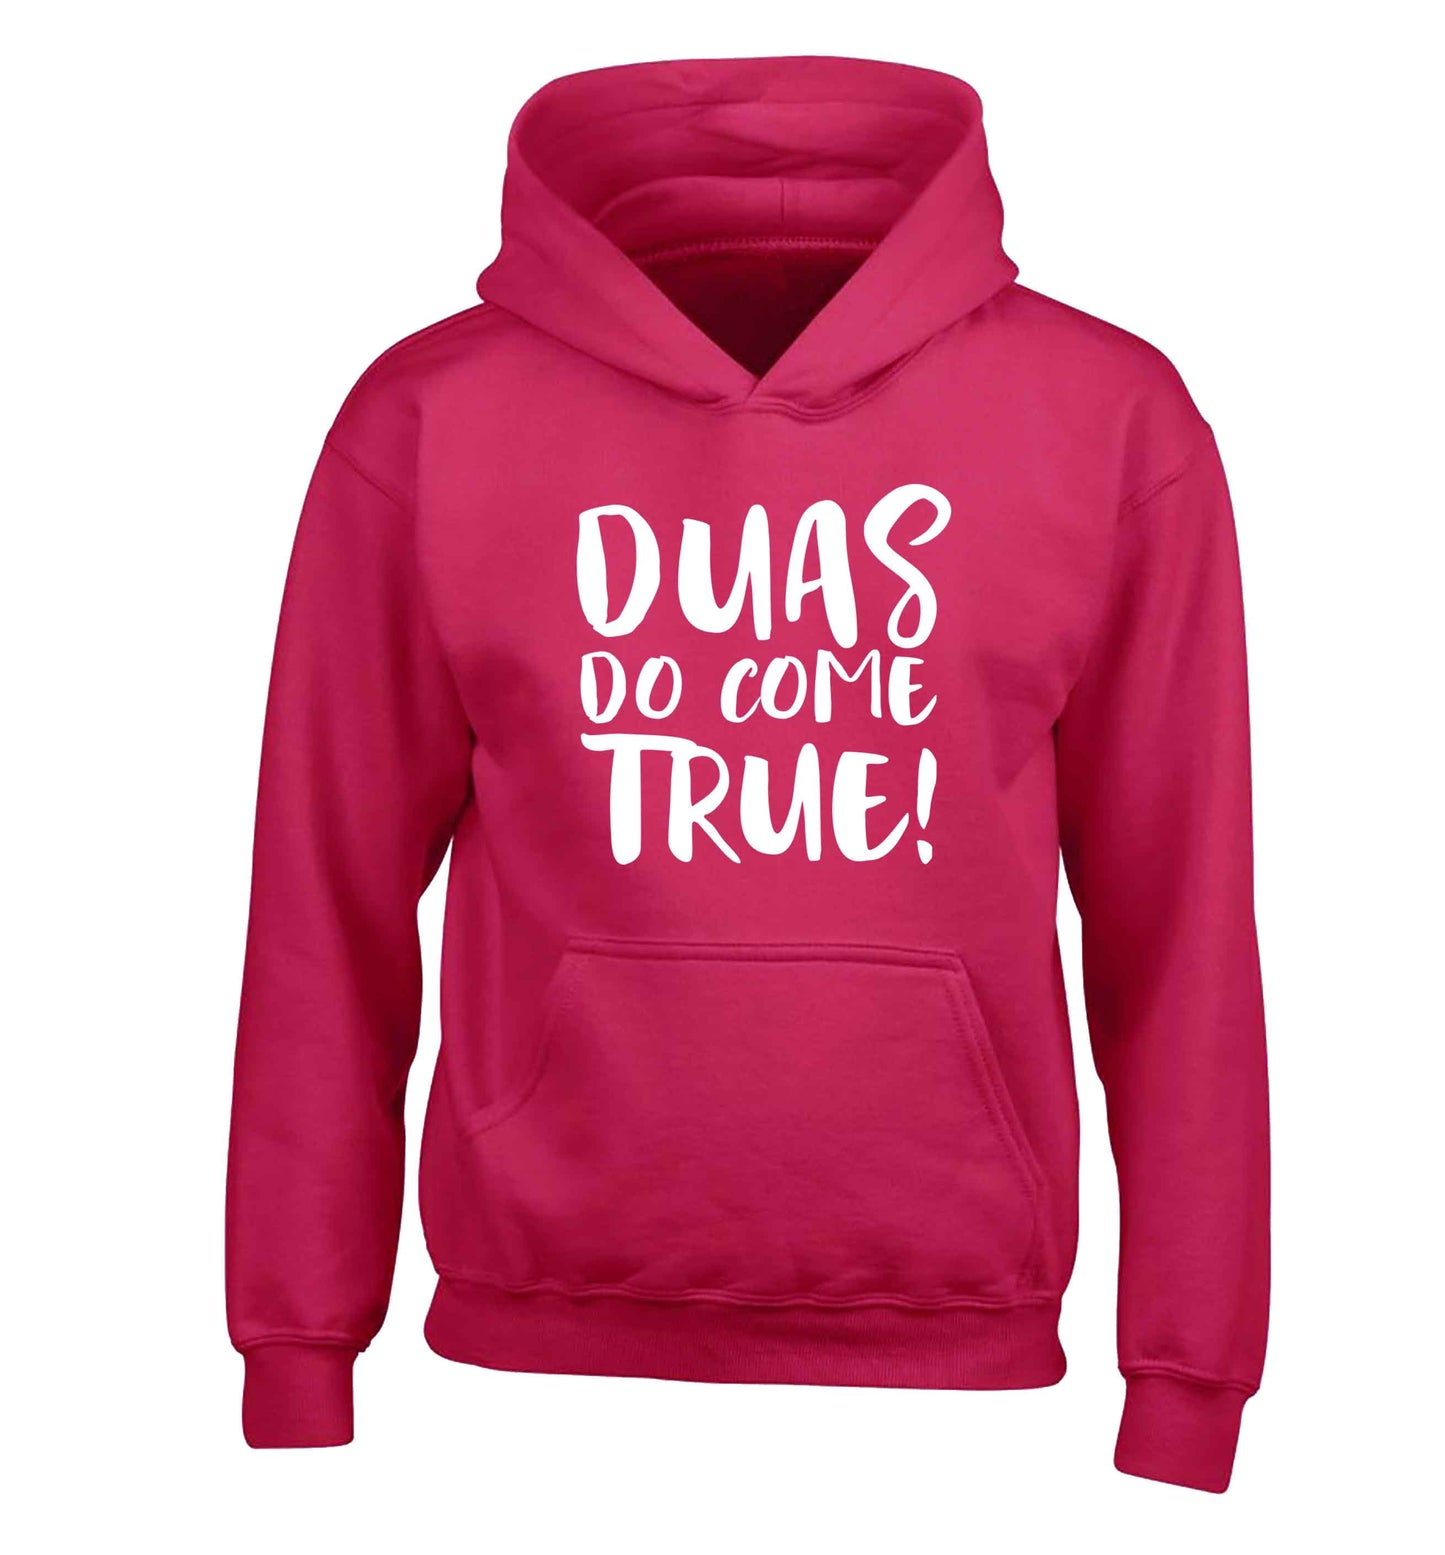 Duas do come true children's pink hoodie 12-13 Years